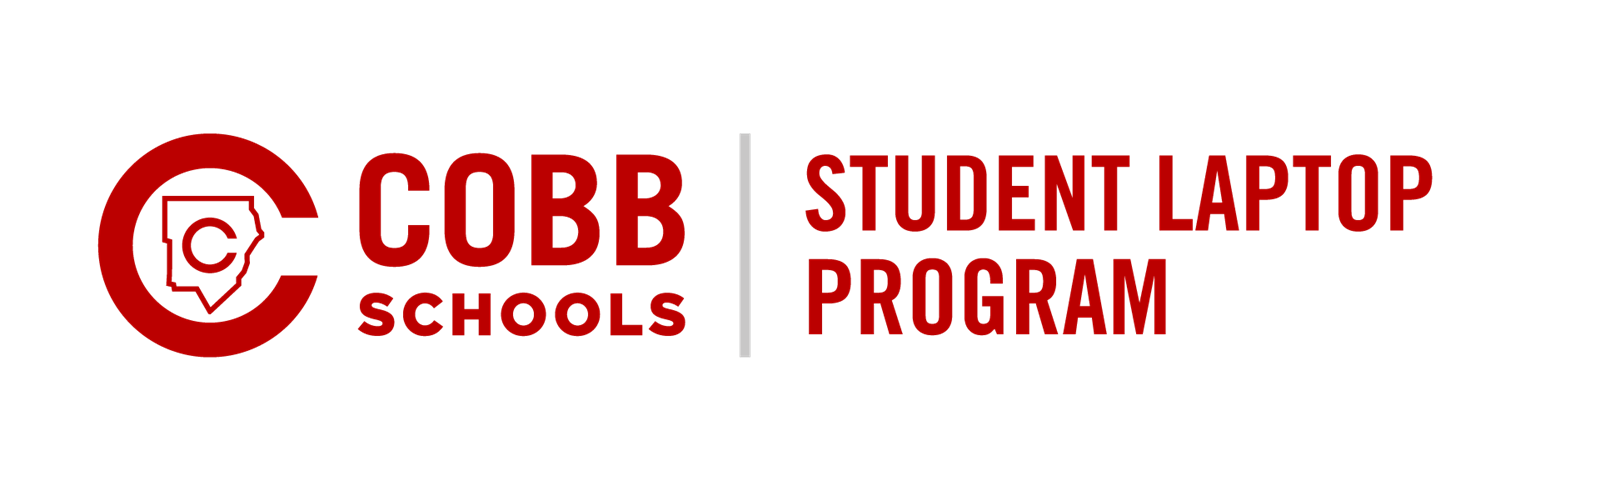 Cobb-Schools-Laptop-Program-Horizontal%20(1).jpg